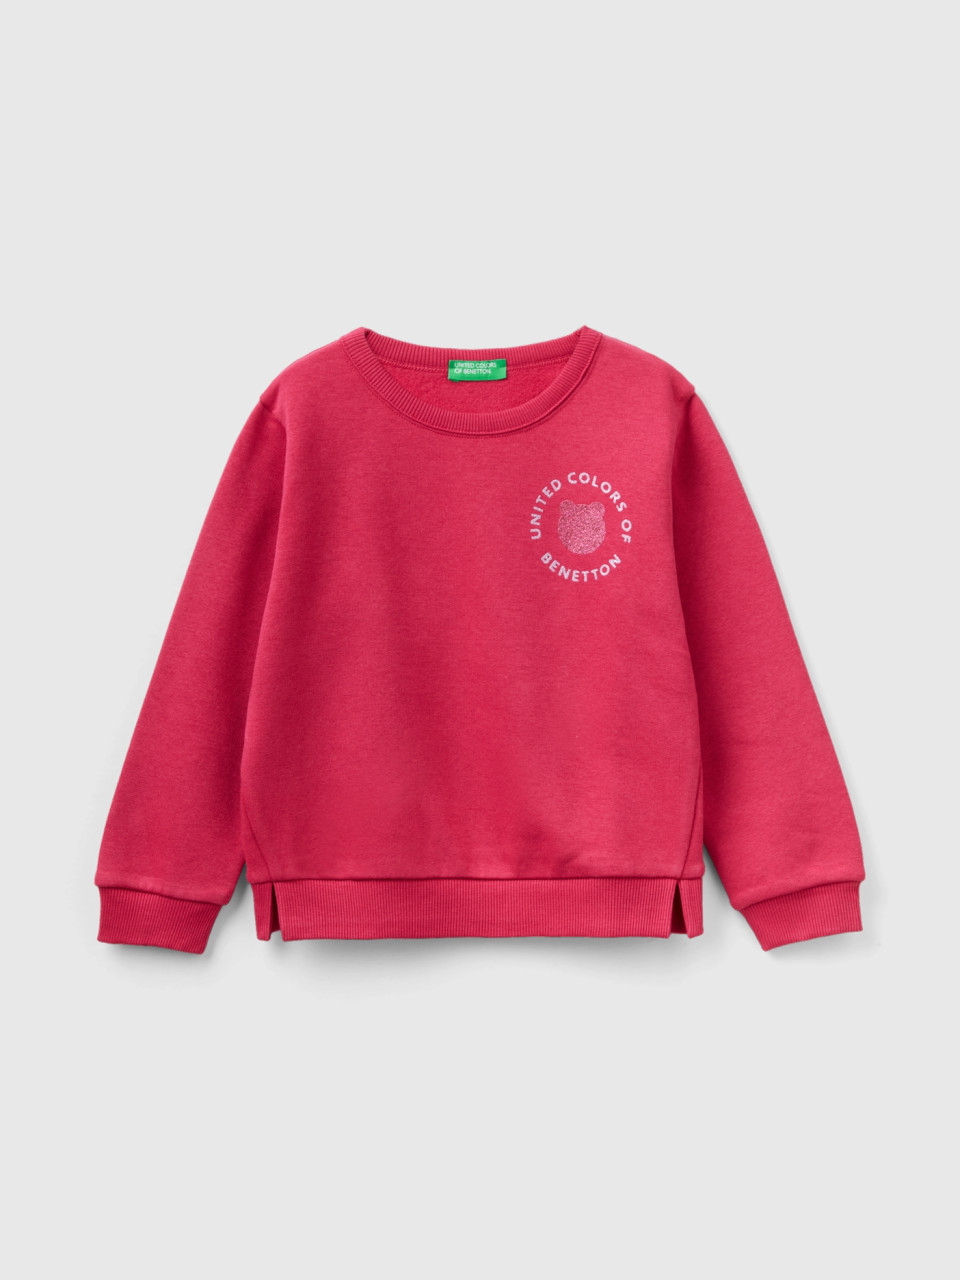 Benetton, Pullover Sweatshirt With Glittery Print, Cyclamen, Kids